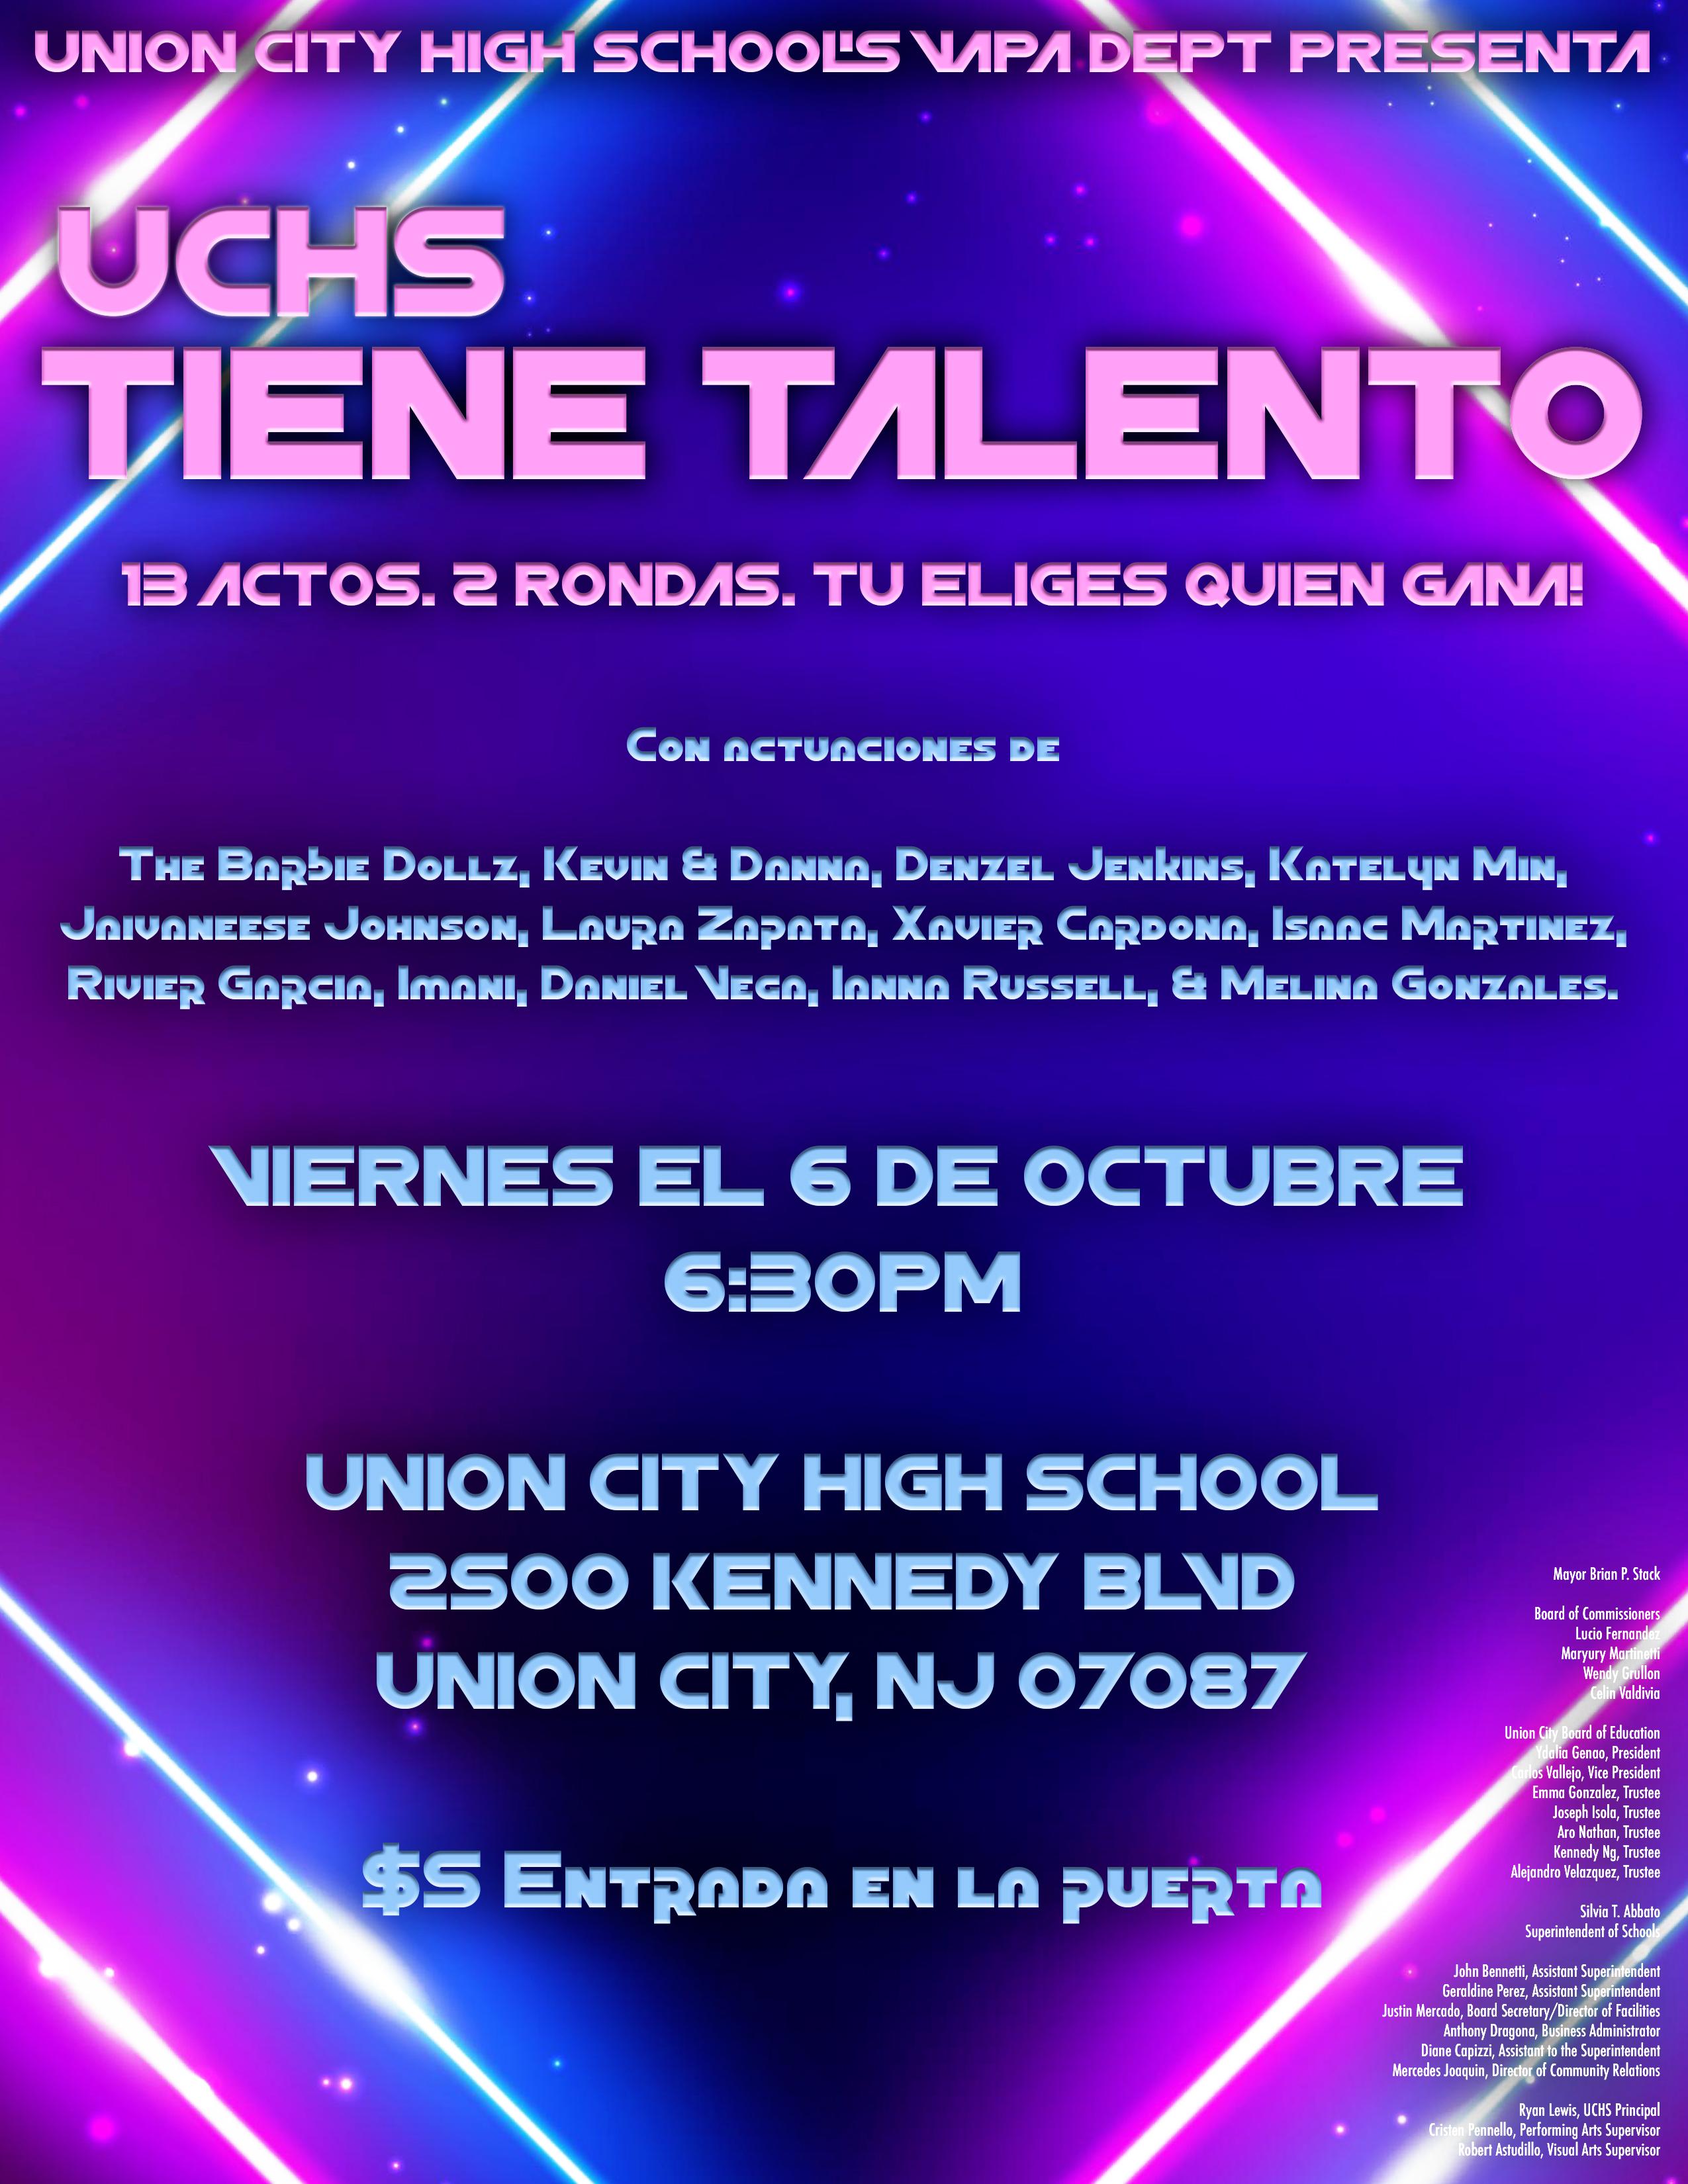 UCHS's Got Talent Show Flyer-Spanish